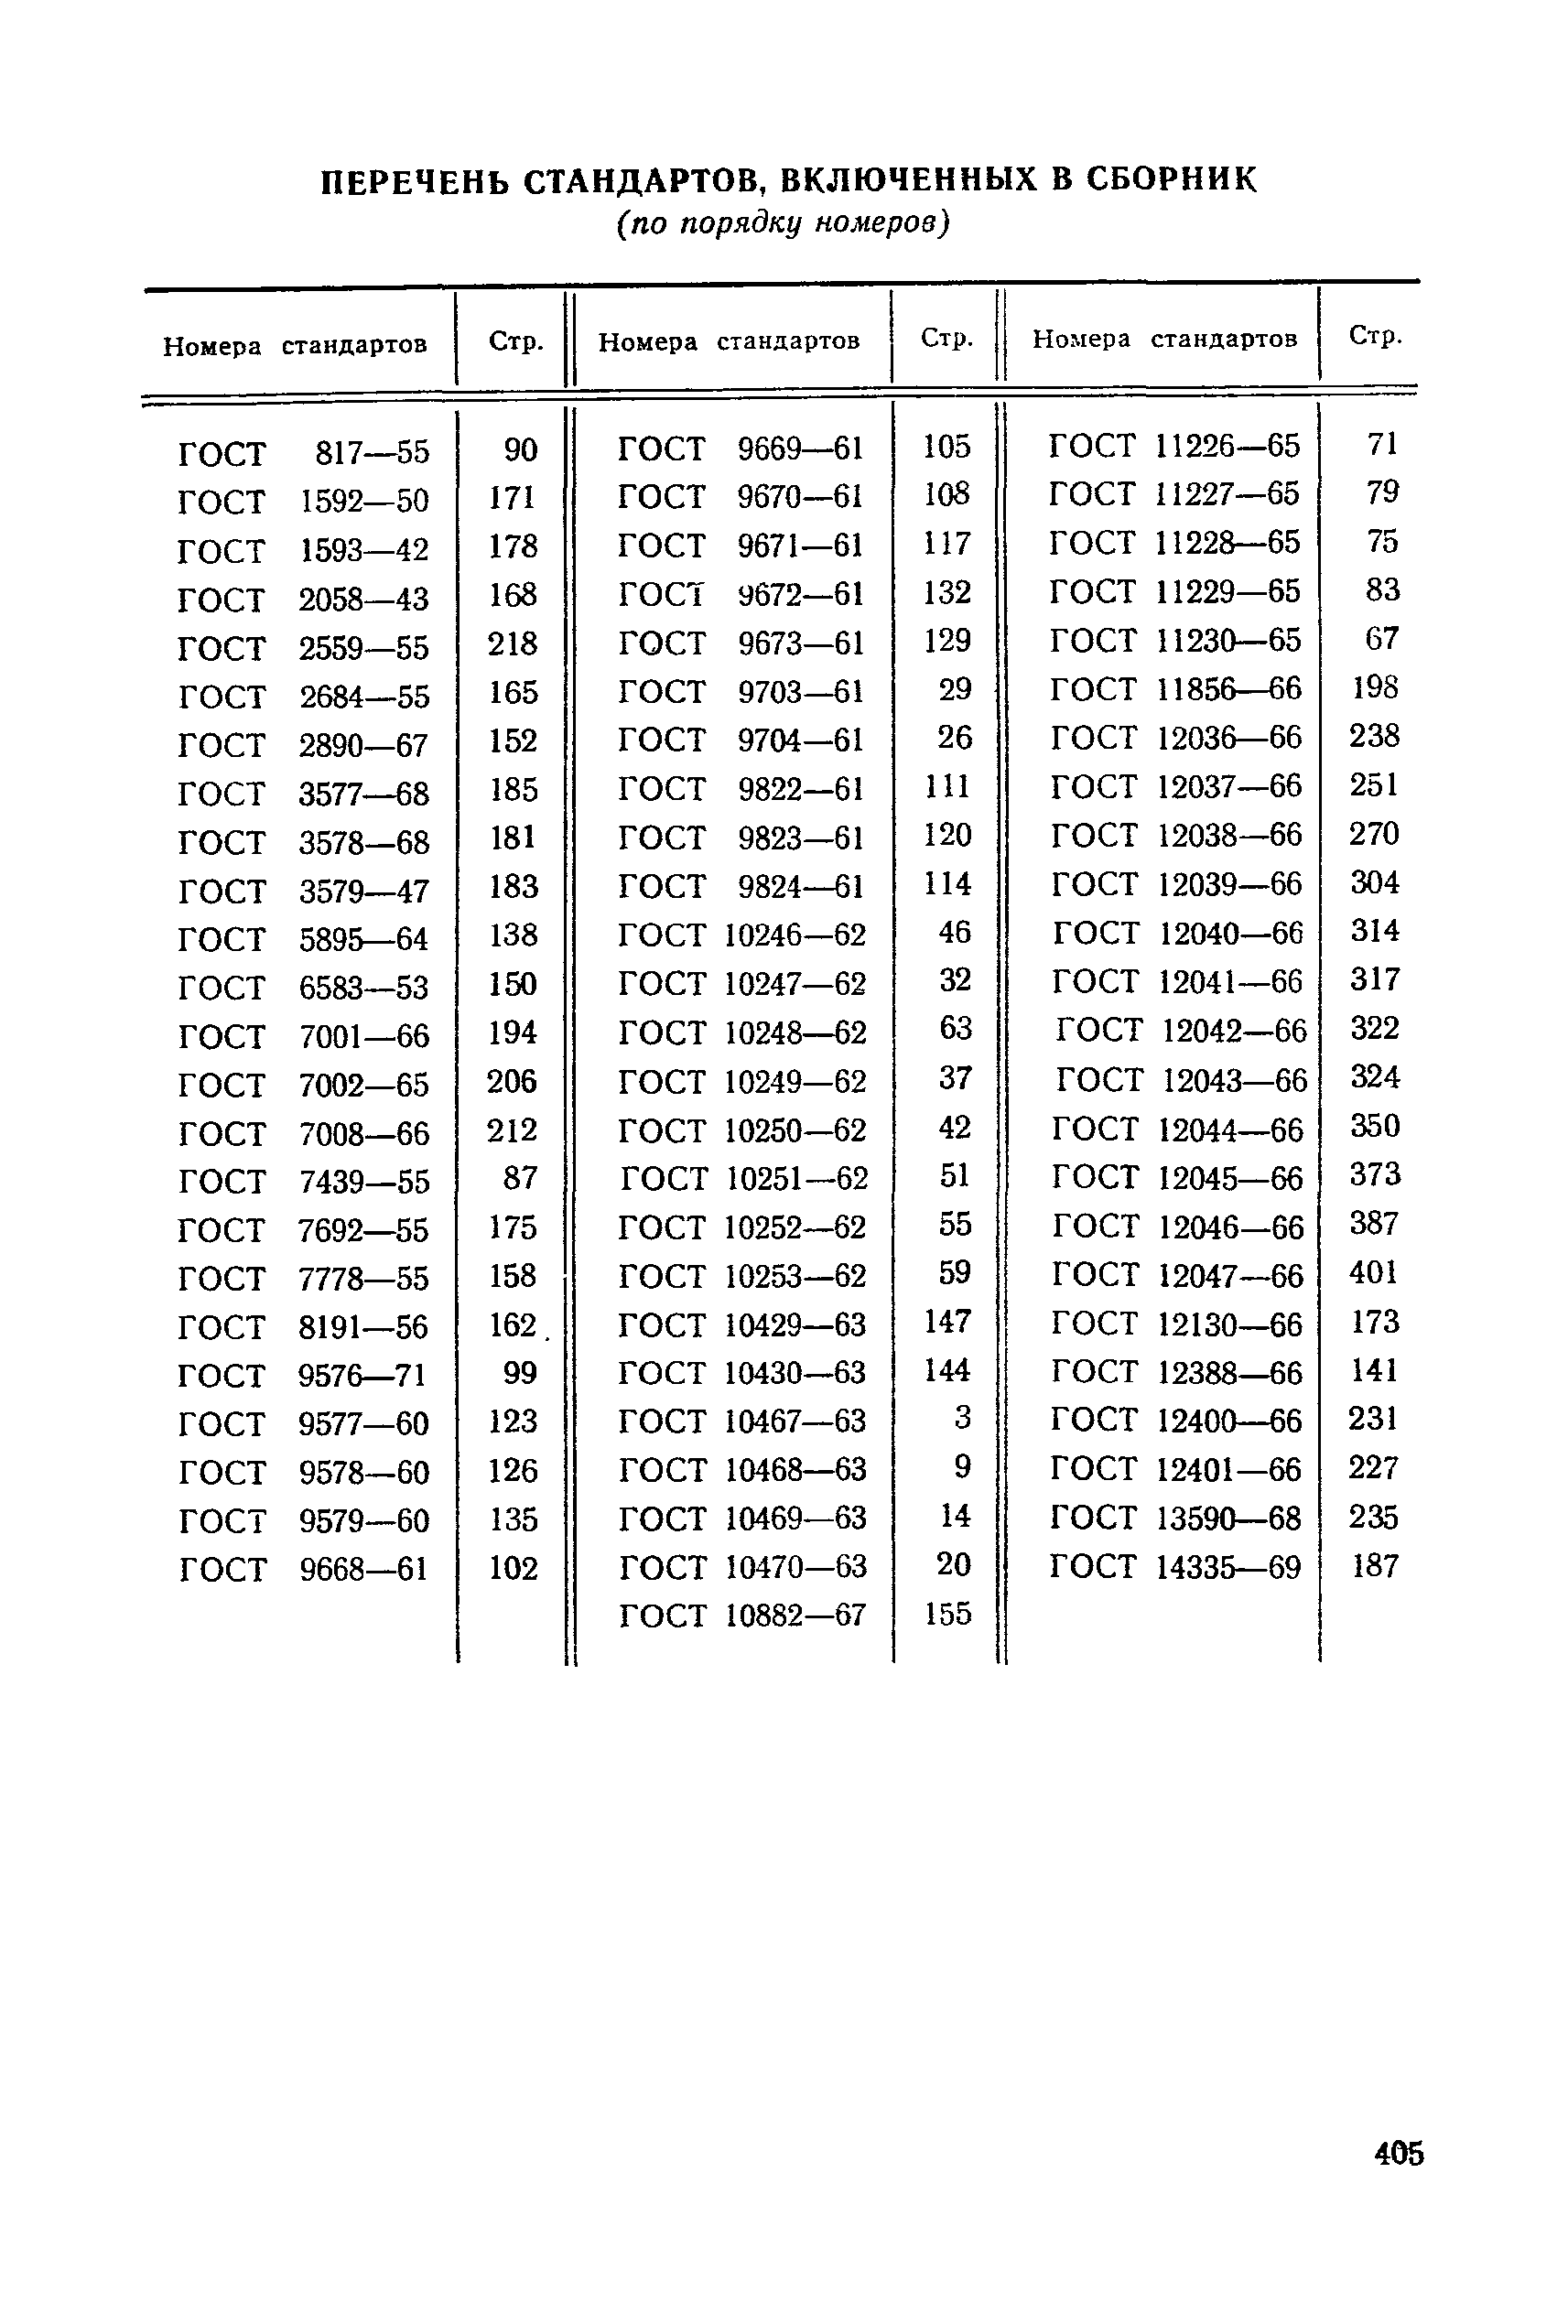 ГОСТ 11228-65